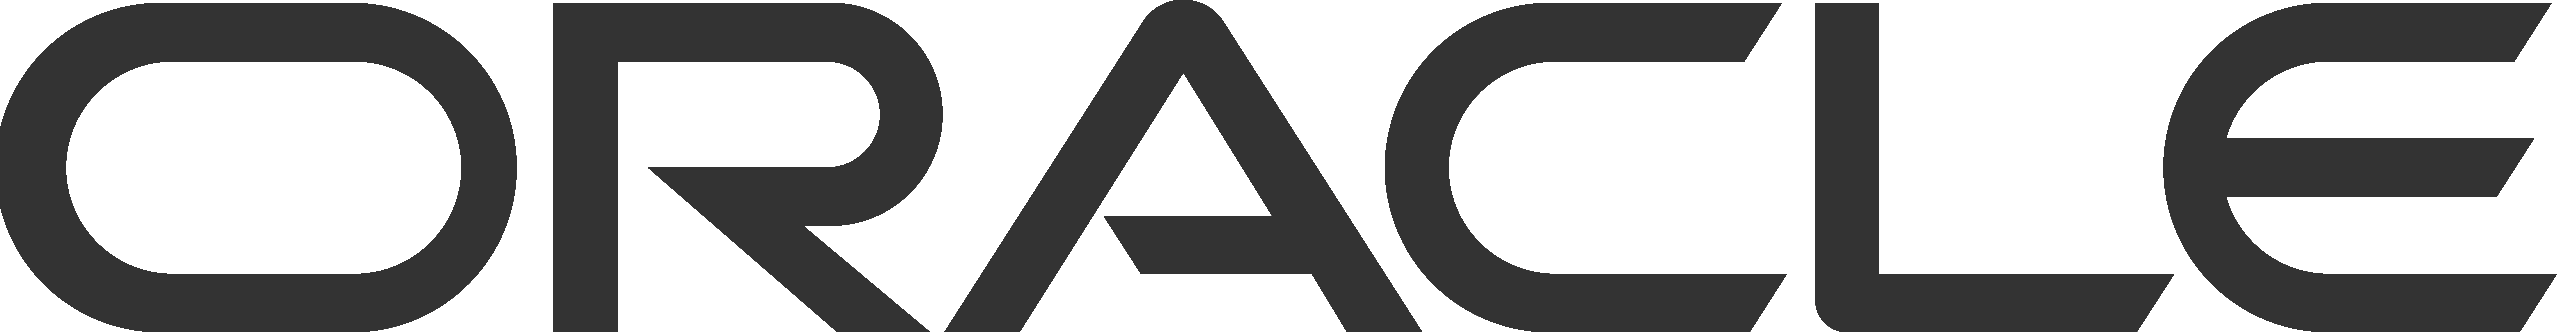 Oracle_logo.svg_